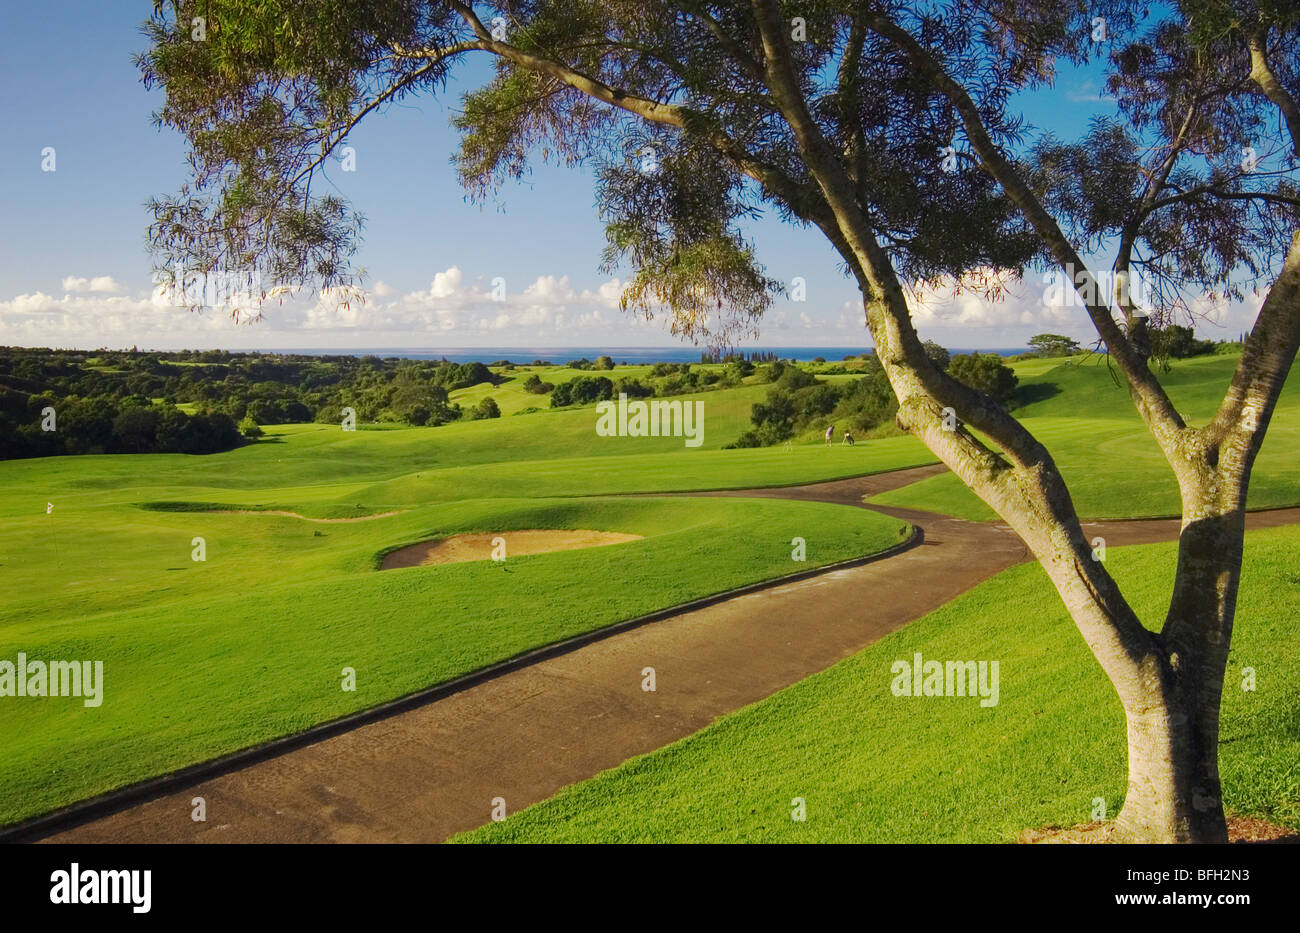 Princeville Resort de golf : Le Prince cours, conçu par Robert Trent Jones, Jr. ; Kauai, Hawaii. Banque D'Images